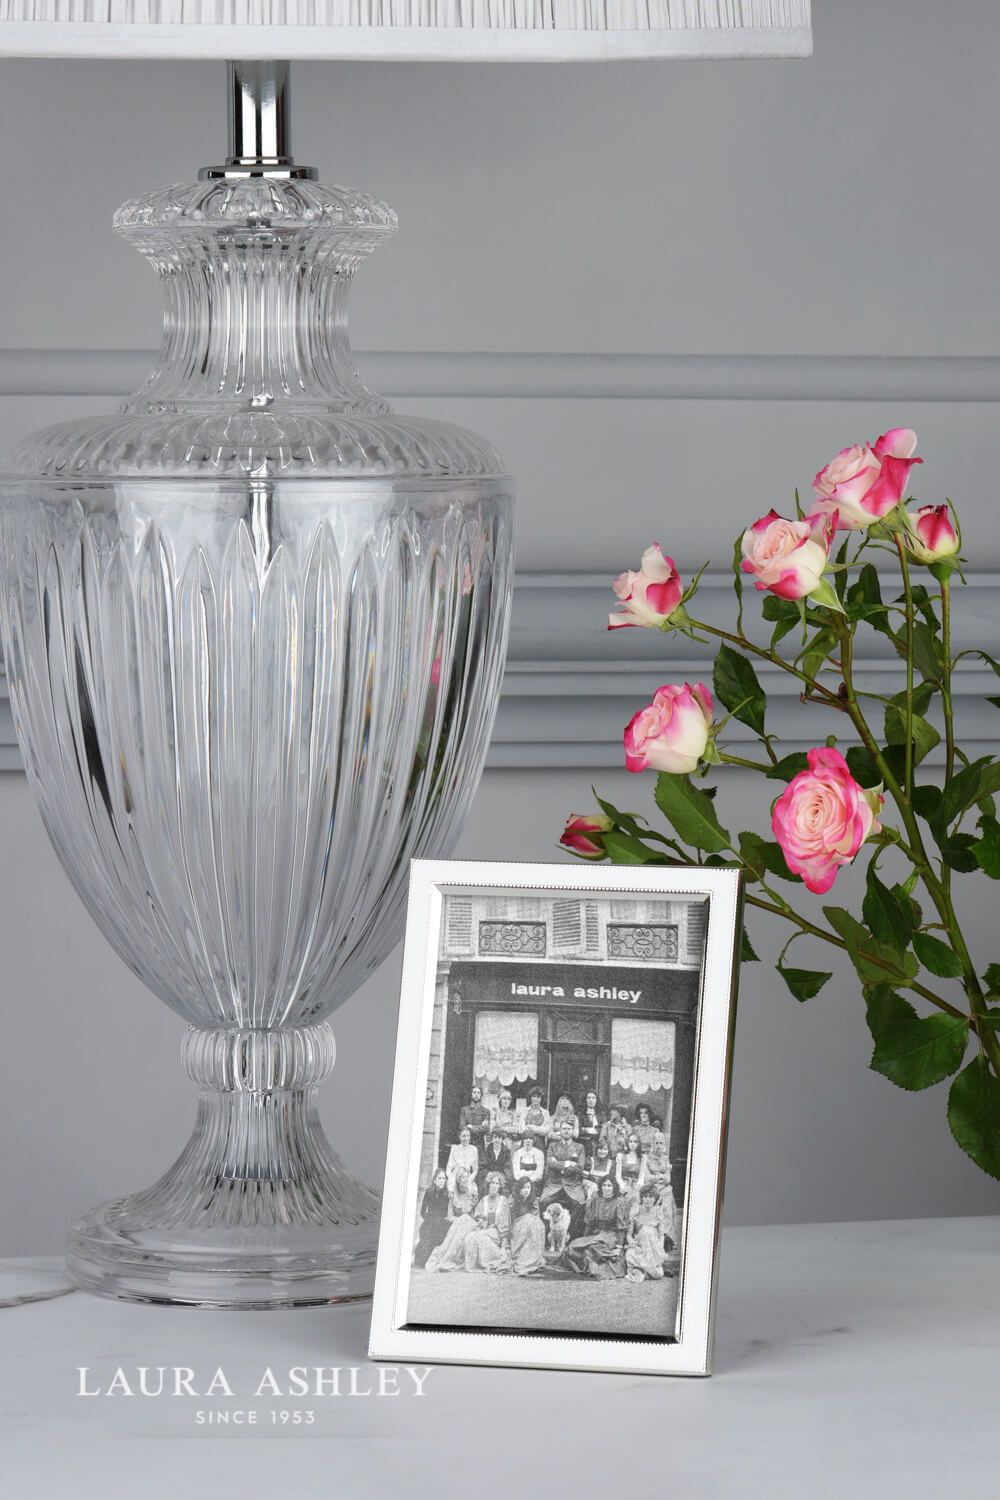 laura ashley neyland photo frame silver plated 4x6 inch - Stillorgan Decor